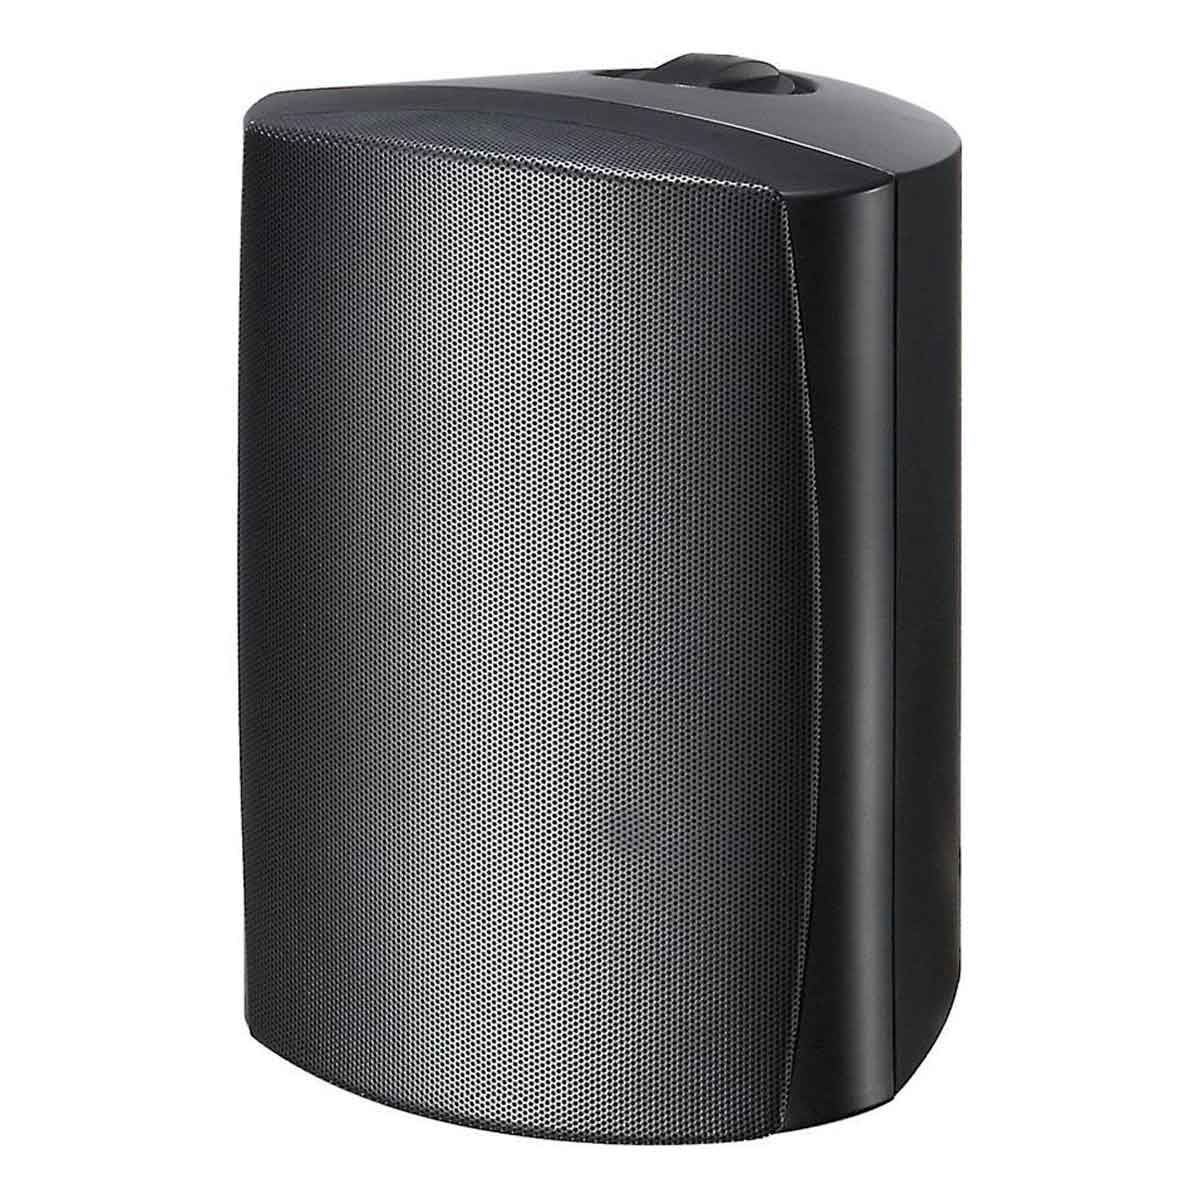 MartinLogan Installer Series 6.5 Inch 2-Way Black Outdoor Speakers - with grille